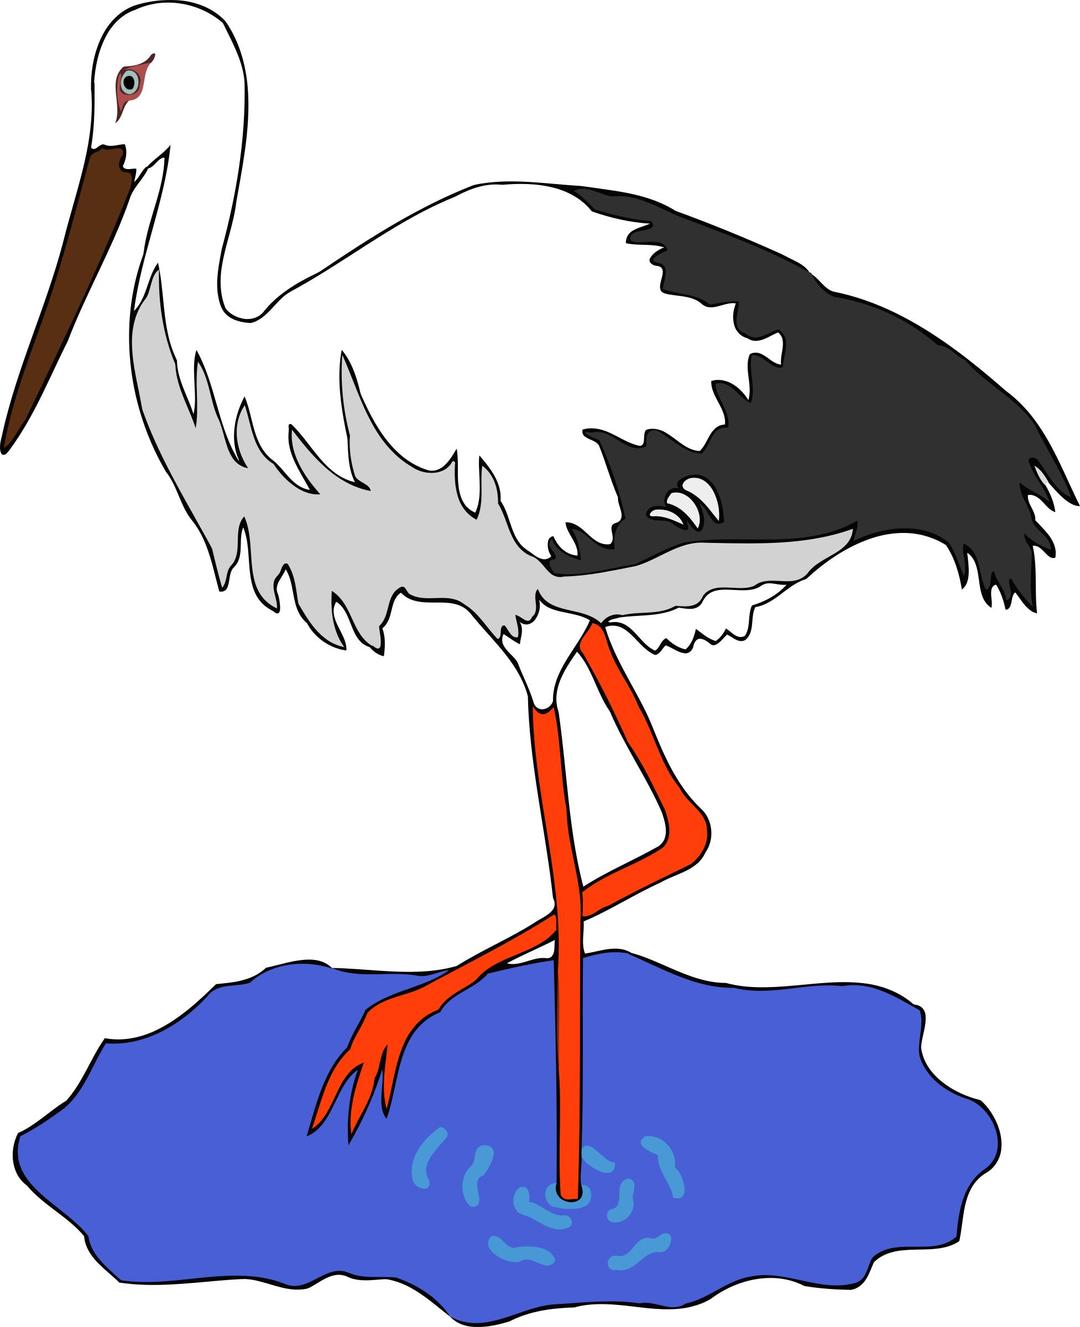 Kress's stork in a pond vectorized png transparent